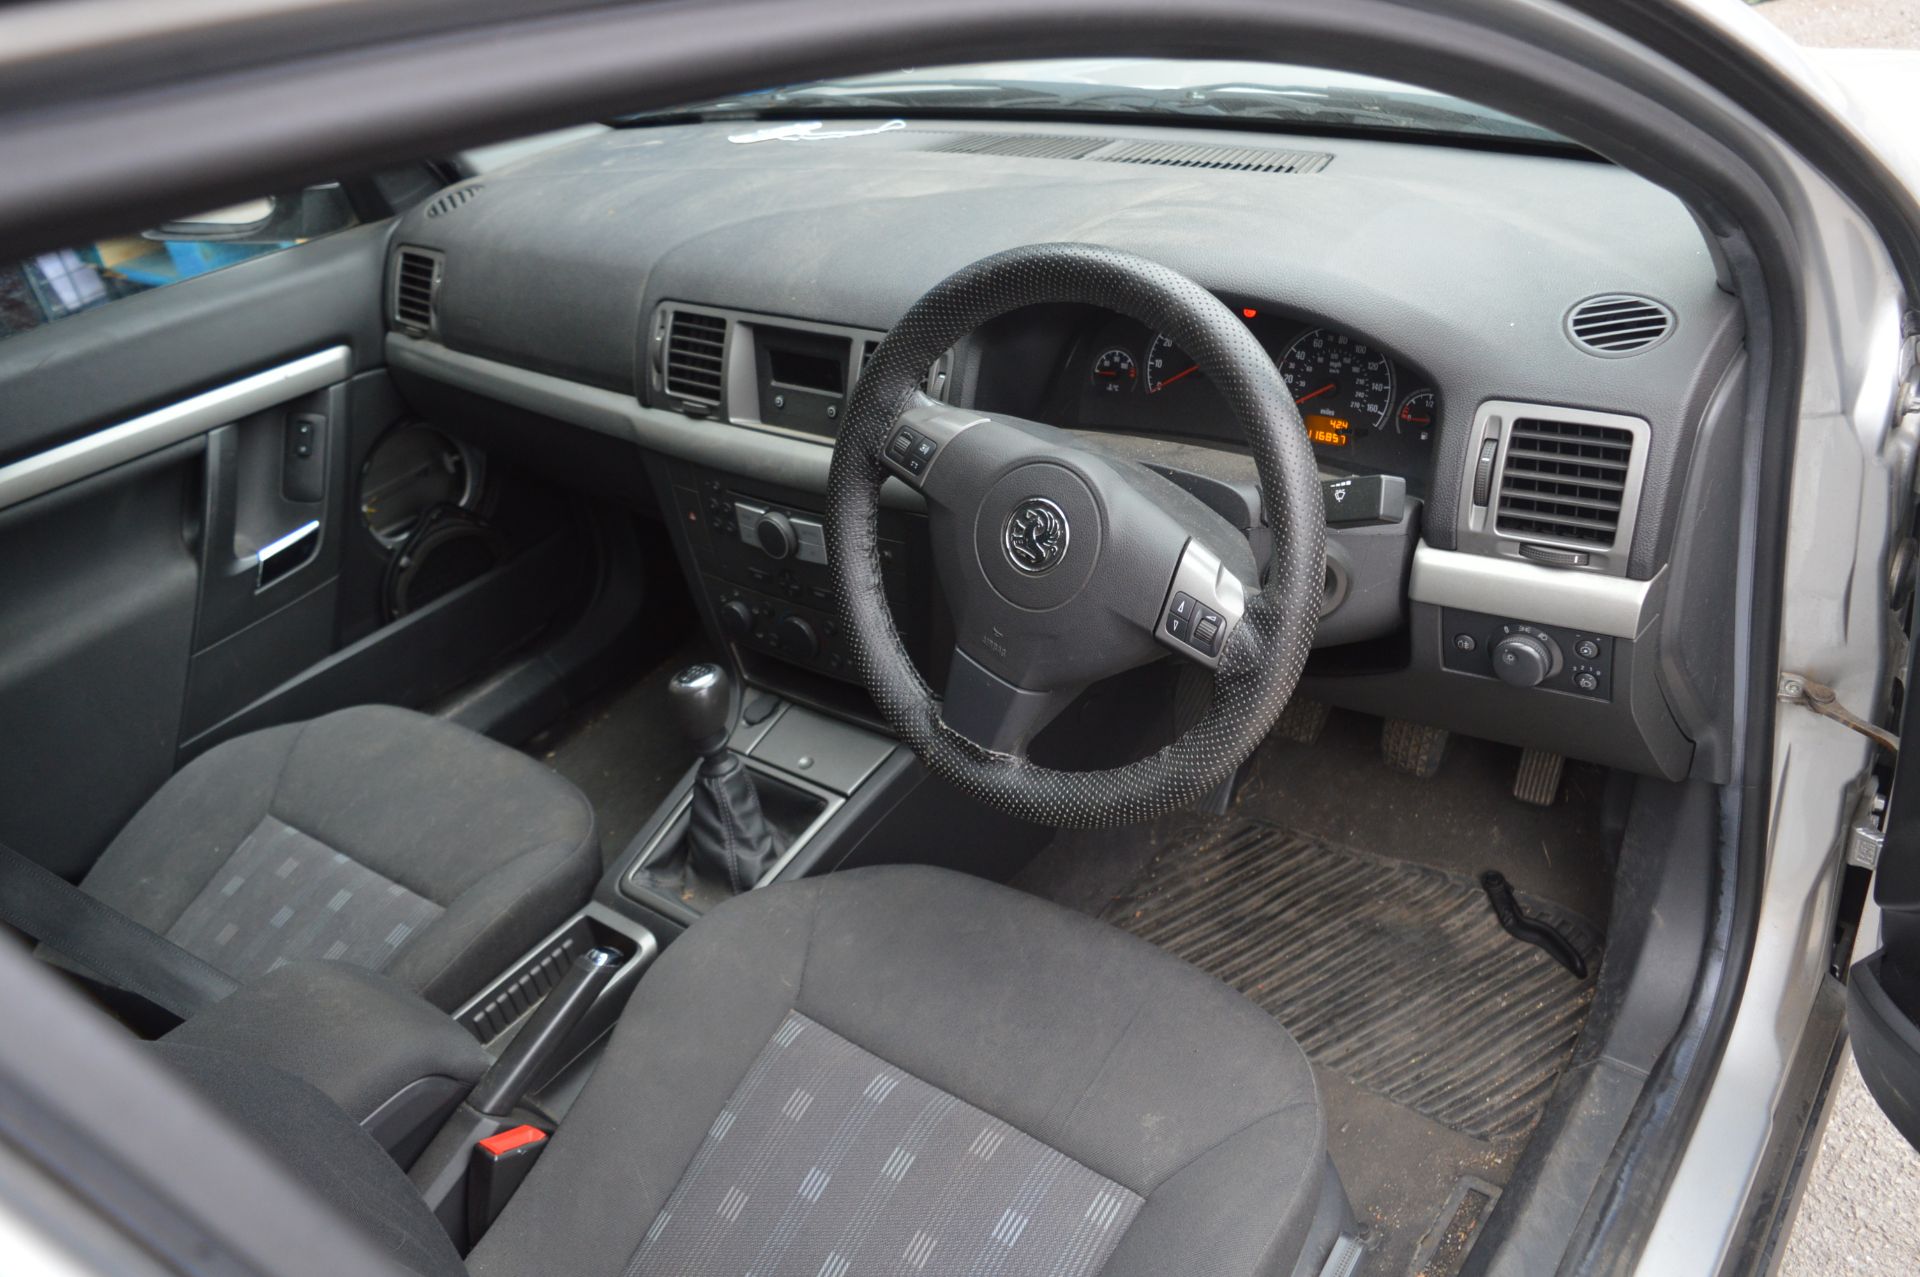 Vauxhall Vectra Estate Reg:AJ08 FNC Mileage:116000 - Image 2 of 6